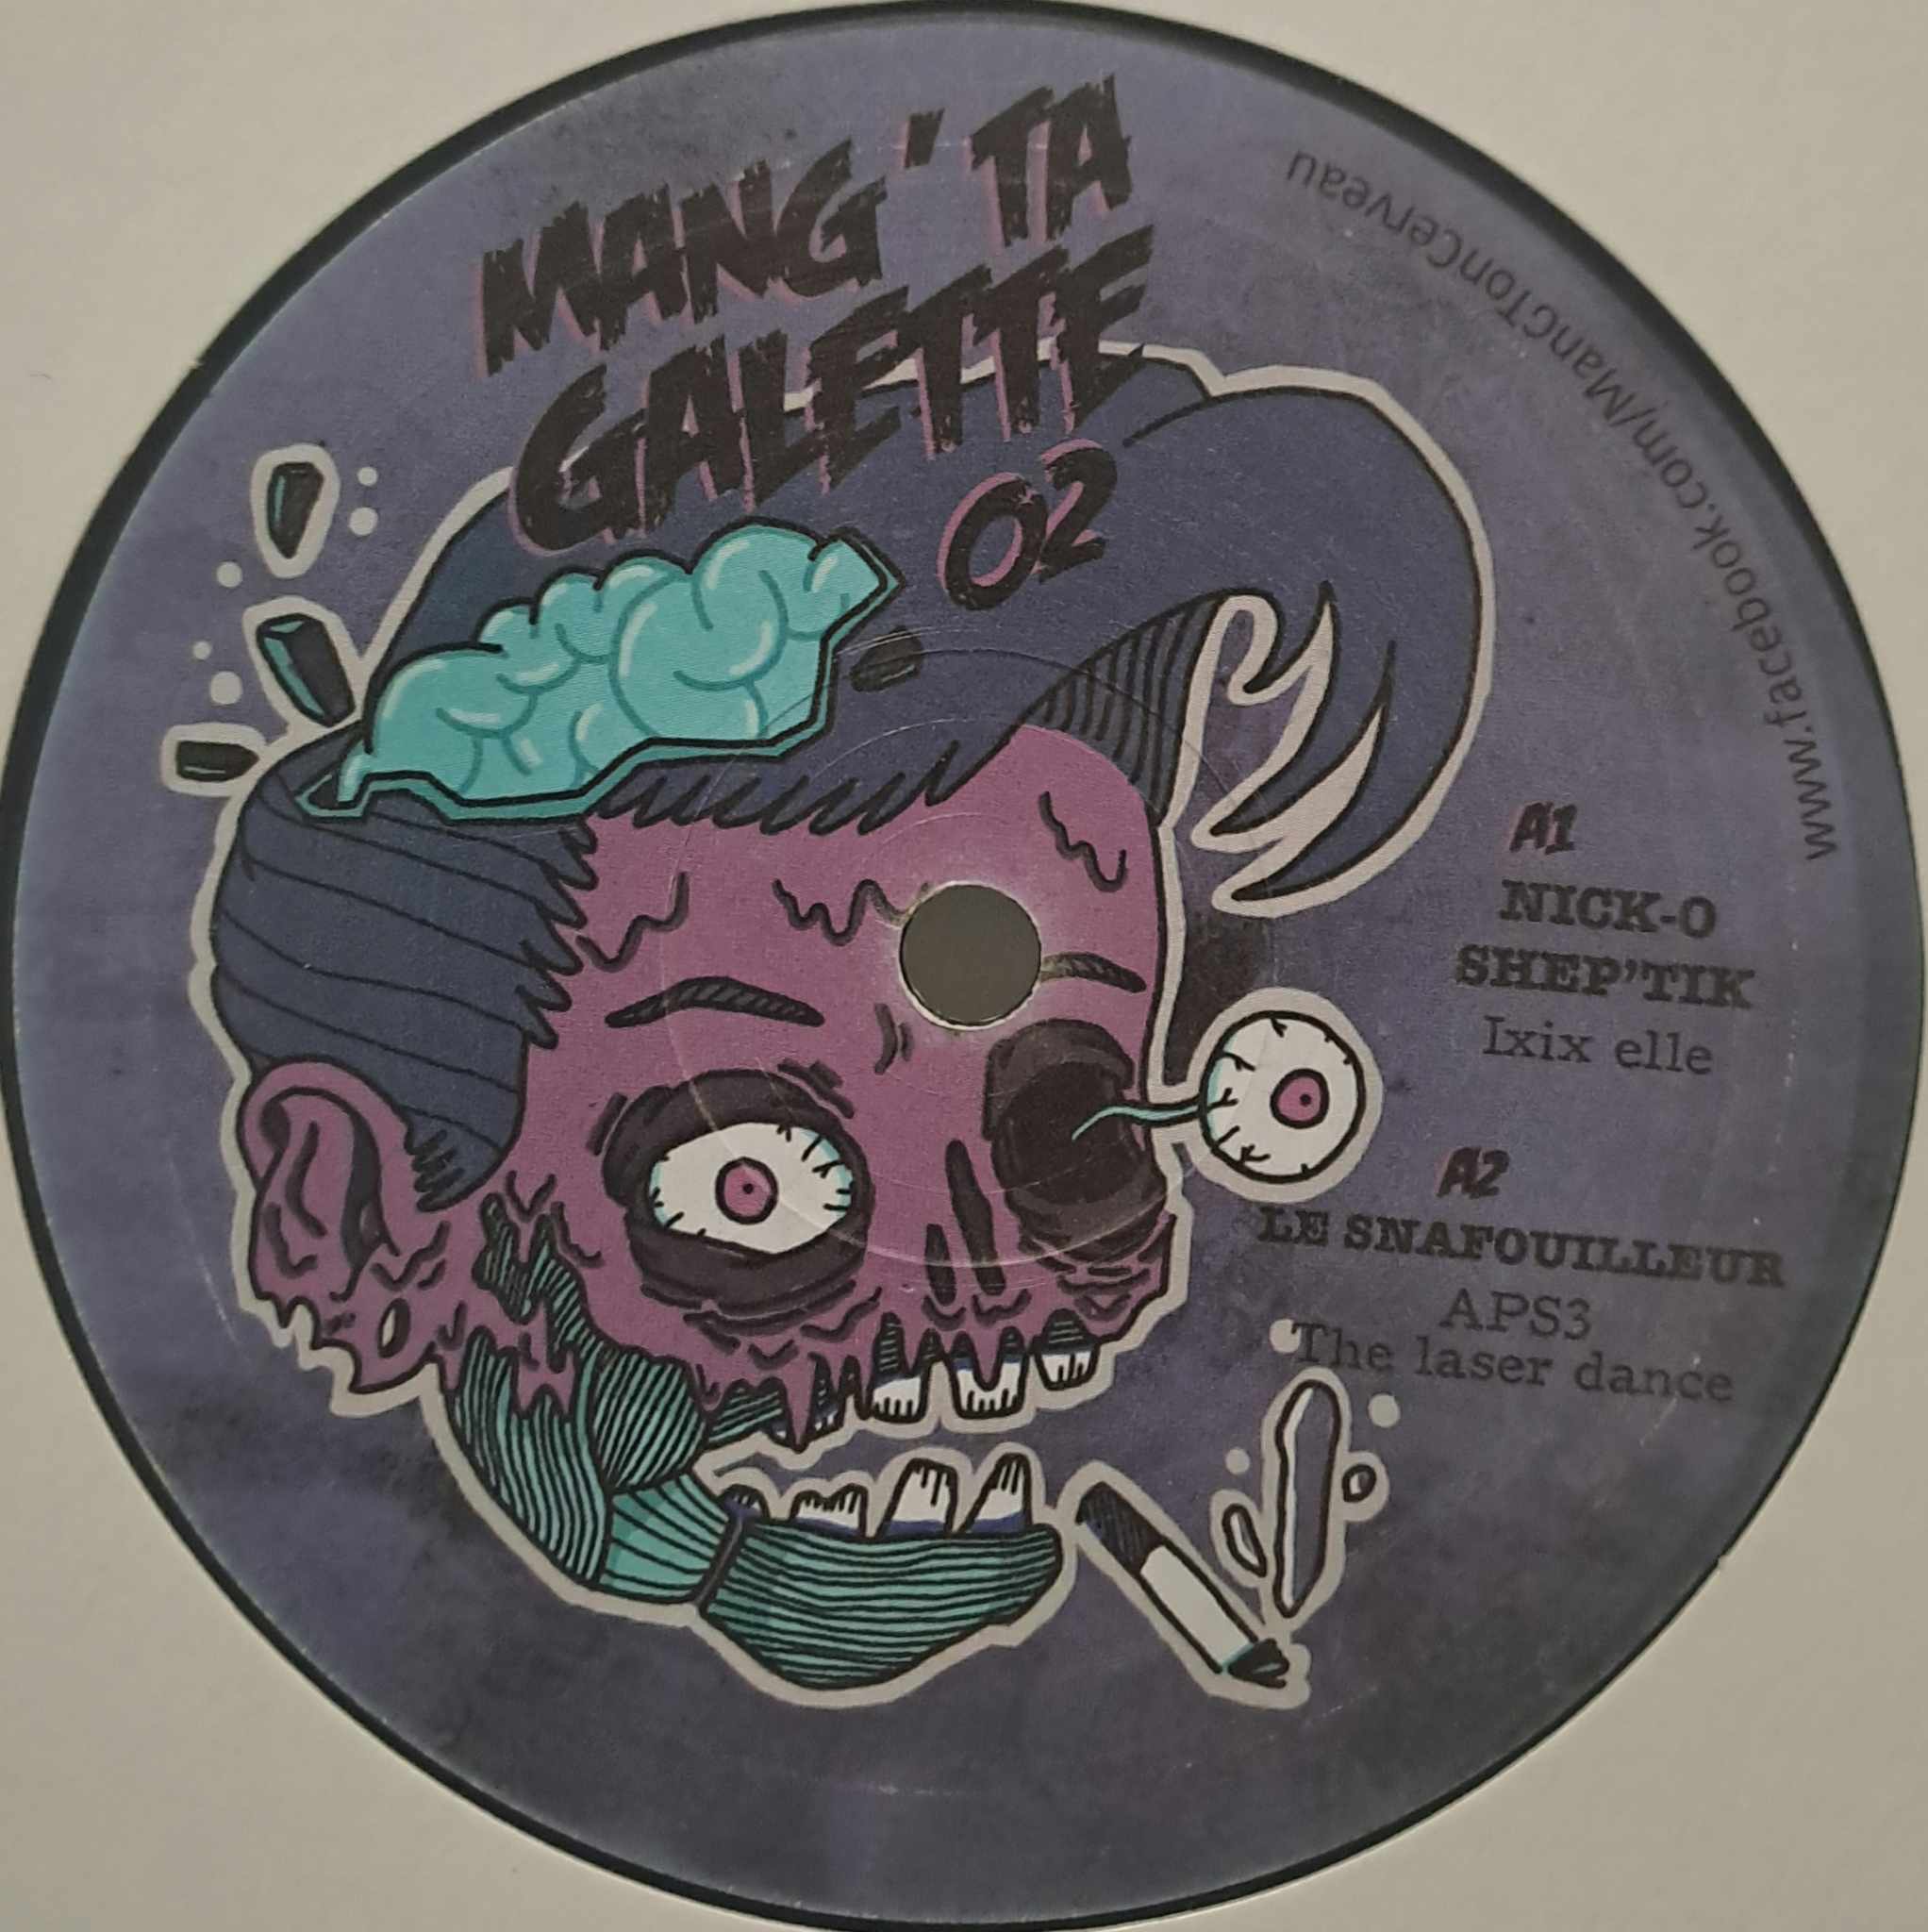 Mang' Ta Galette 02 - vinyle freetekno